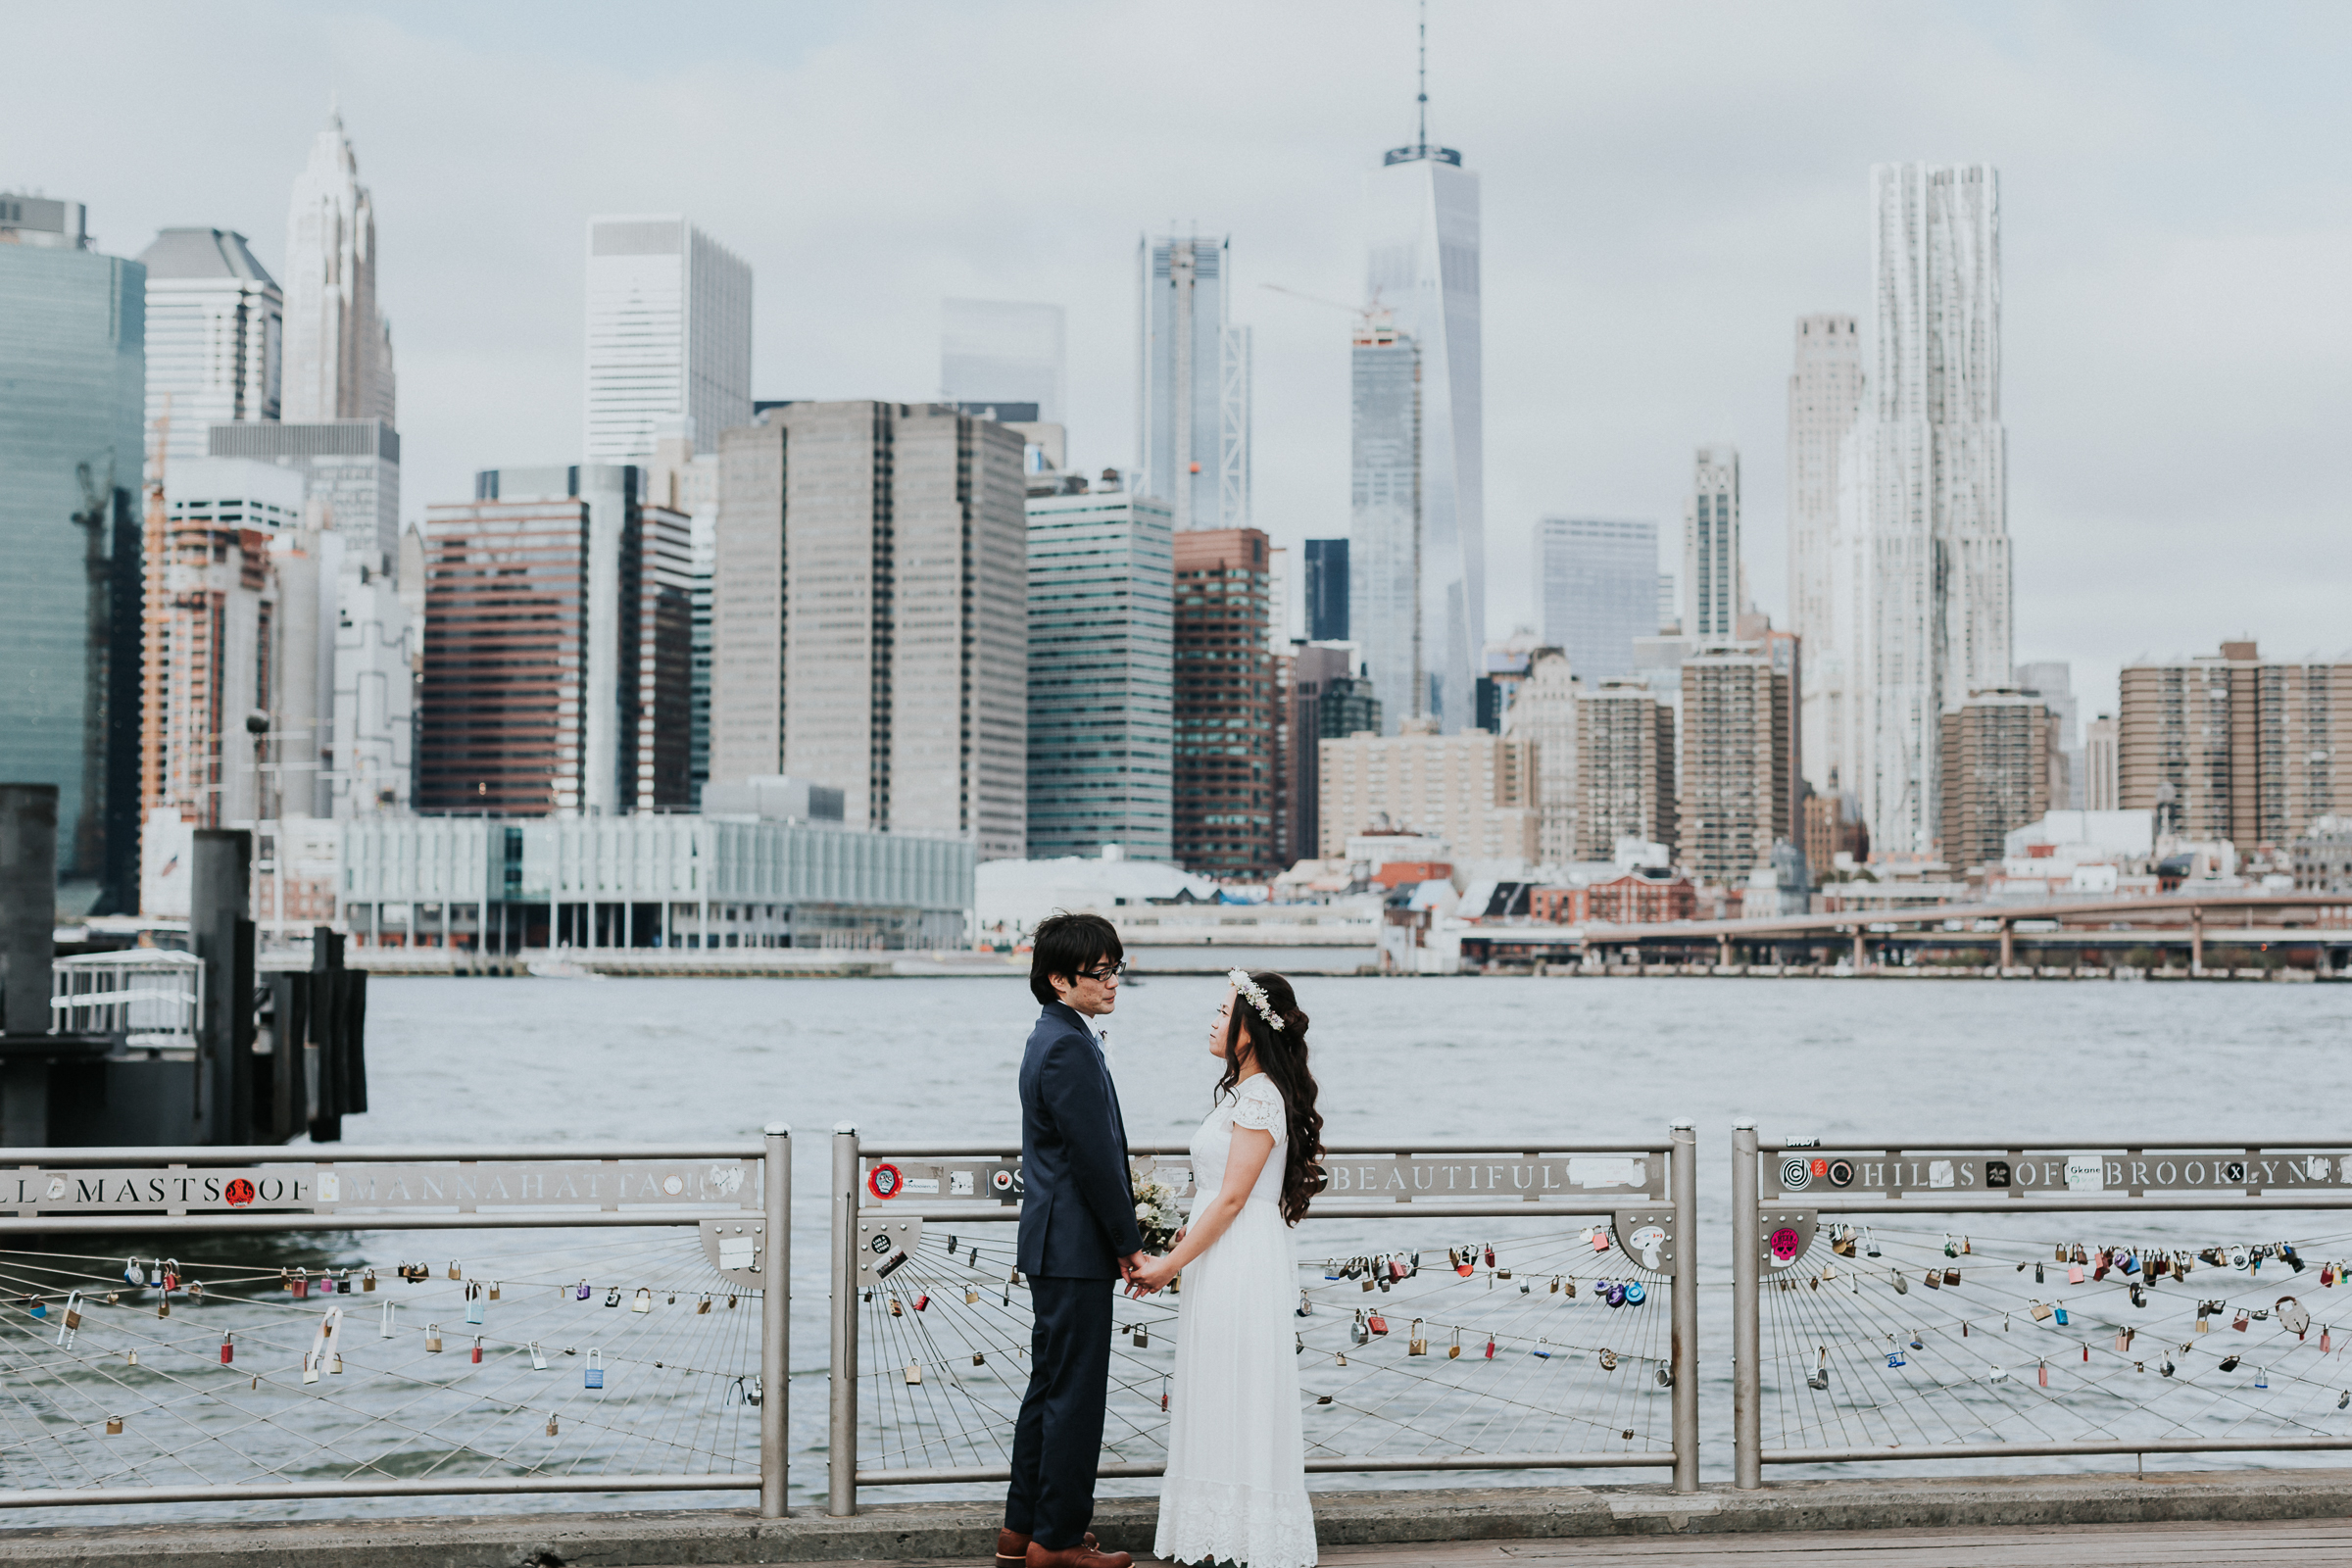 Central-Park-Brooklyn-Bridge-Dumbo-NYC-Documentary-Wedding-Photographer-22.jpg